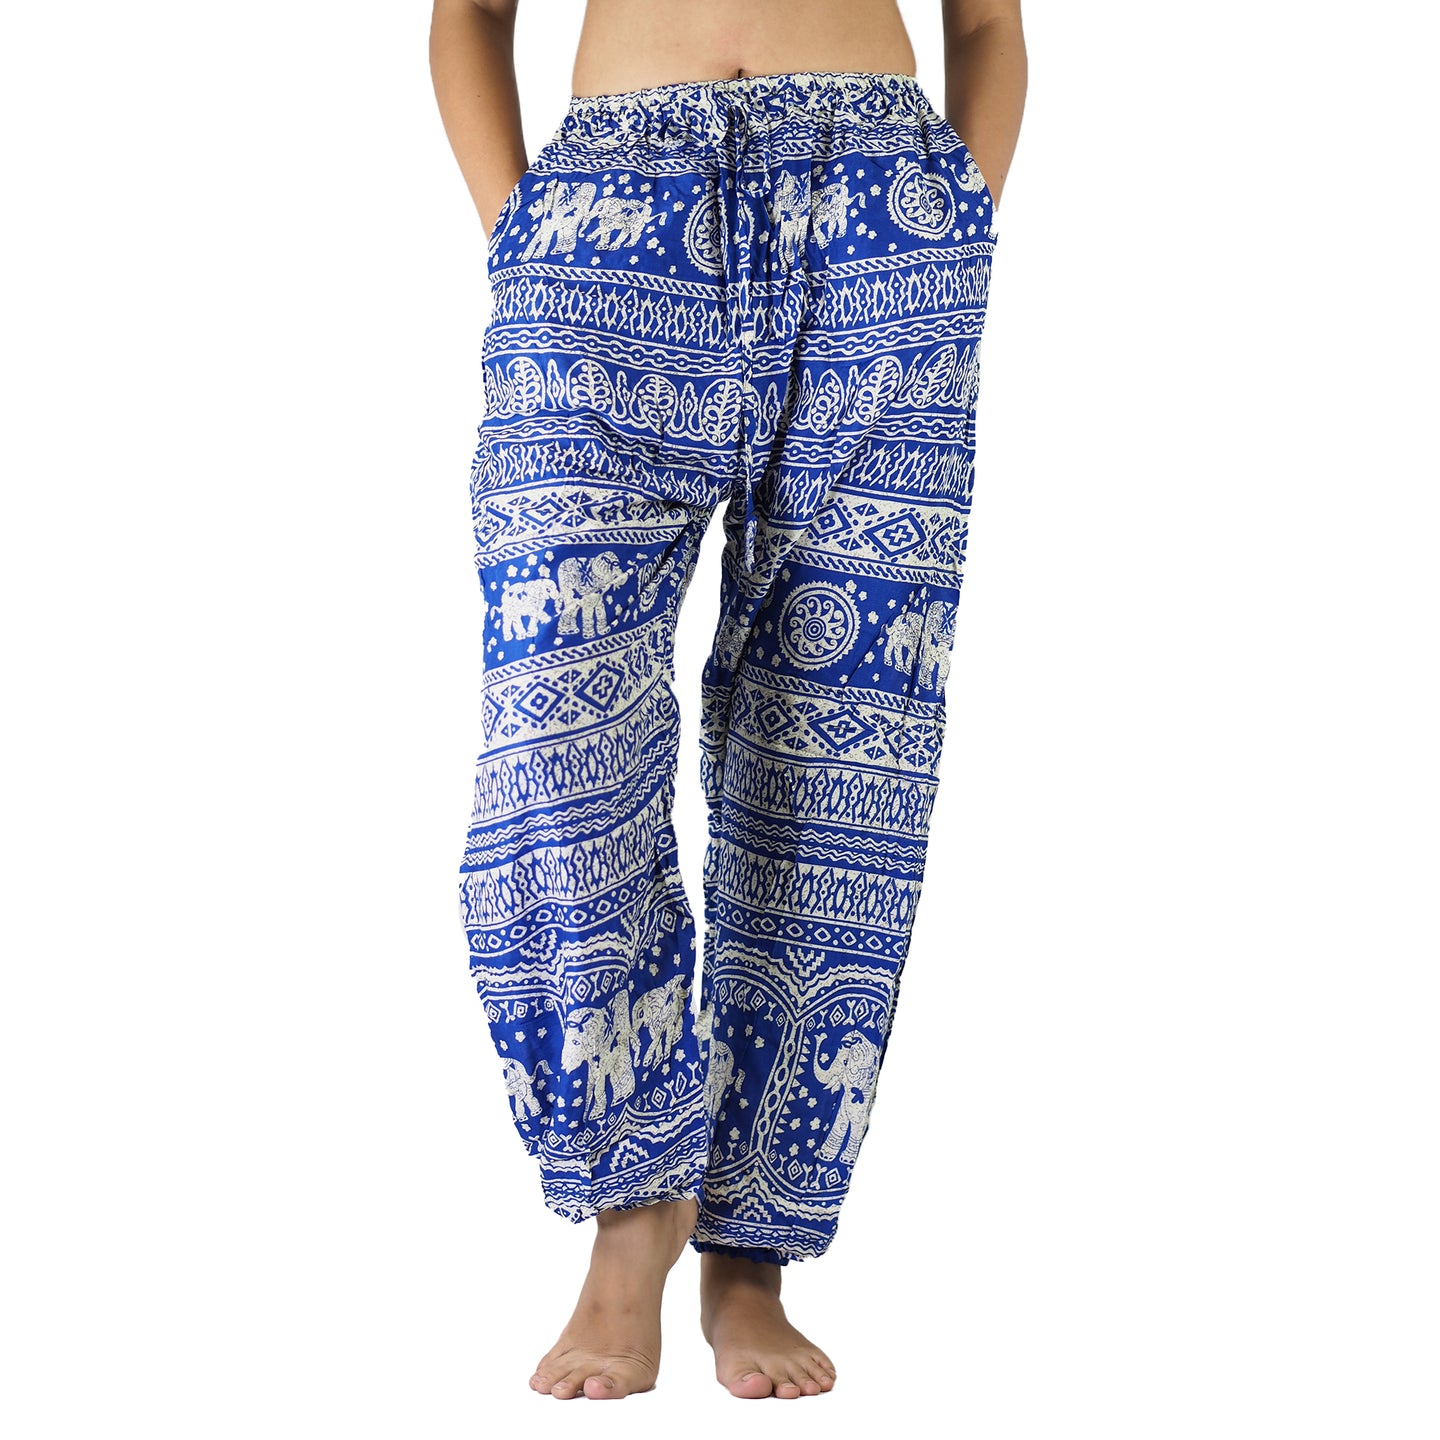 Elephant Temple Unisex Drawstring Genie Pants in Bright Blue PP0110 020014 06